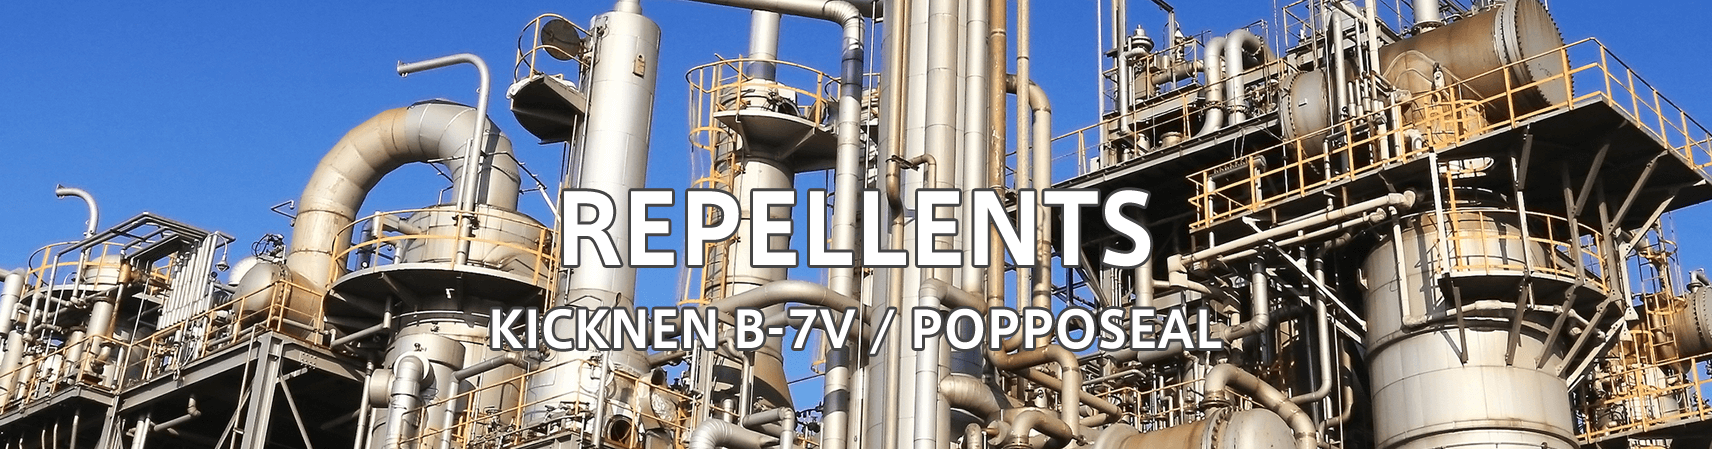 Repellents KICKNEN B-7V/POPOSEAL